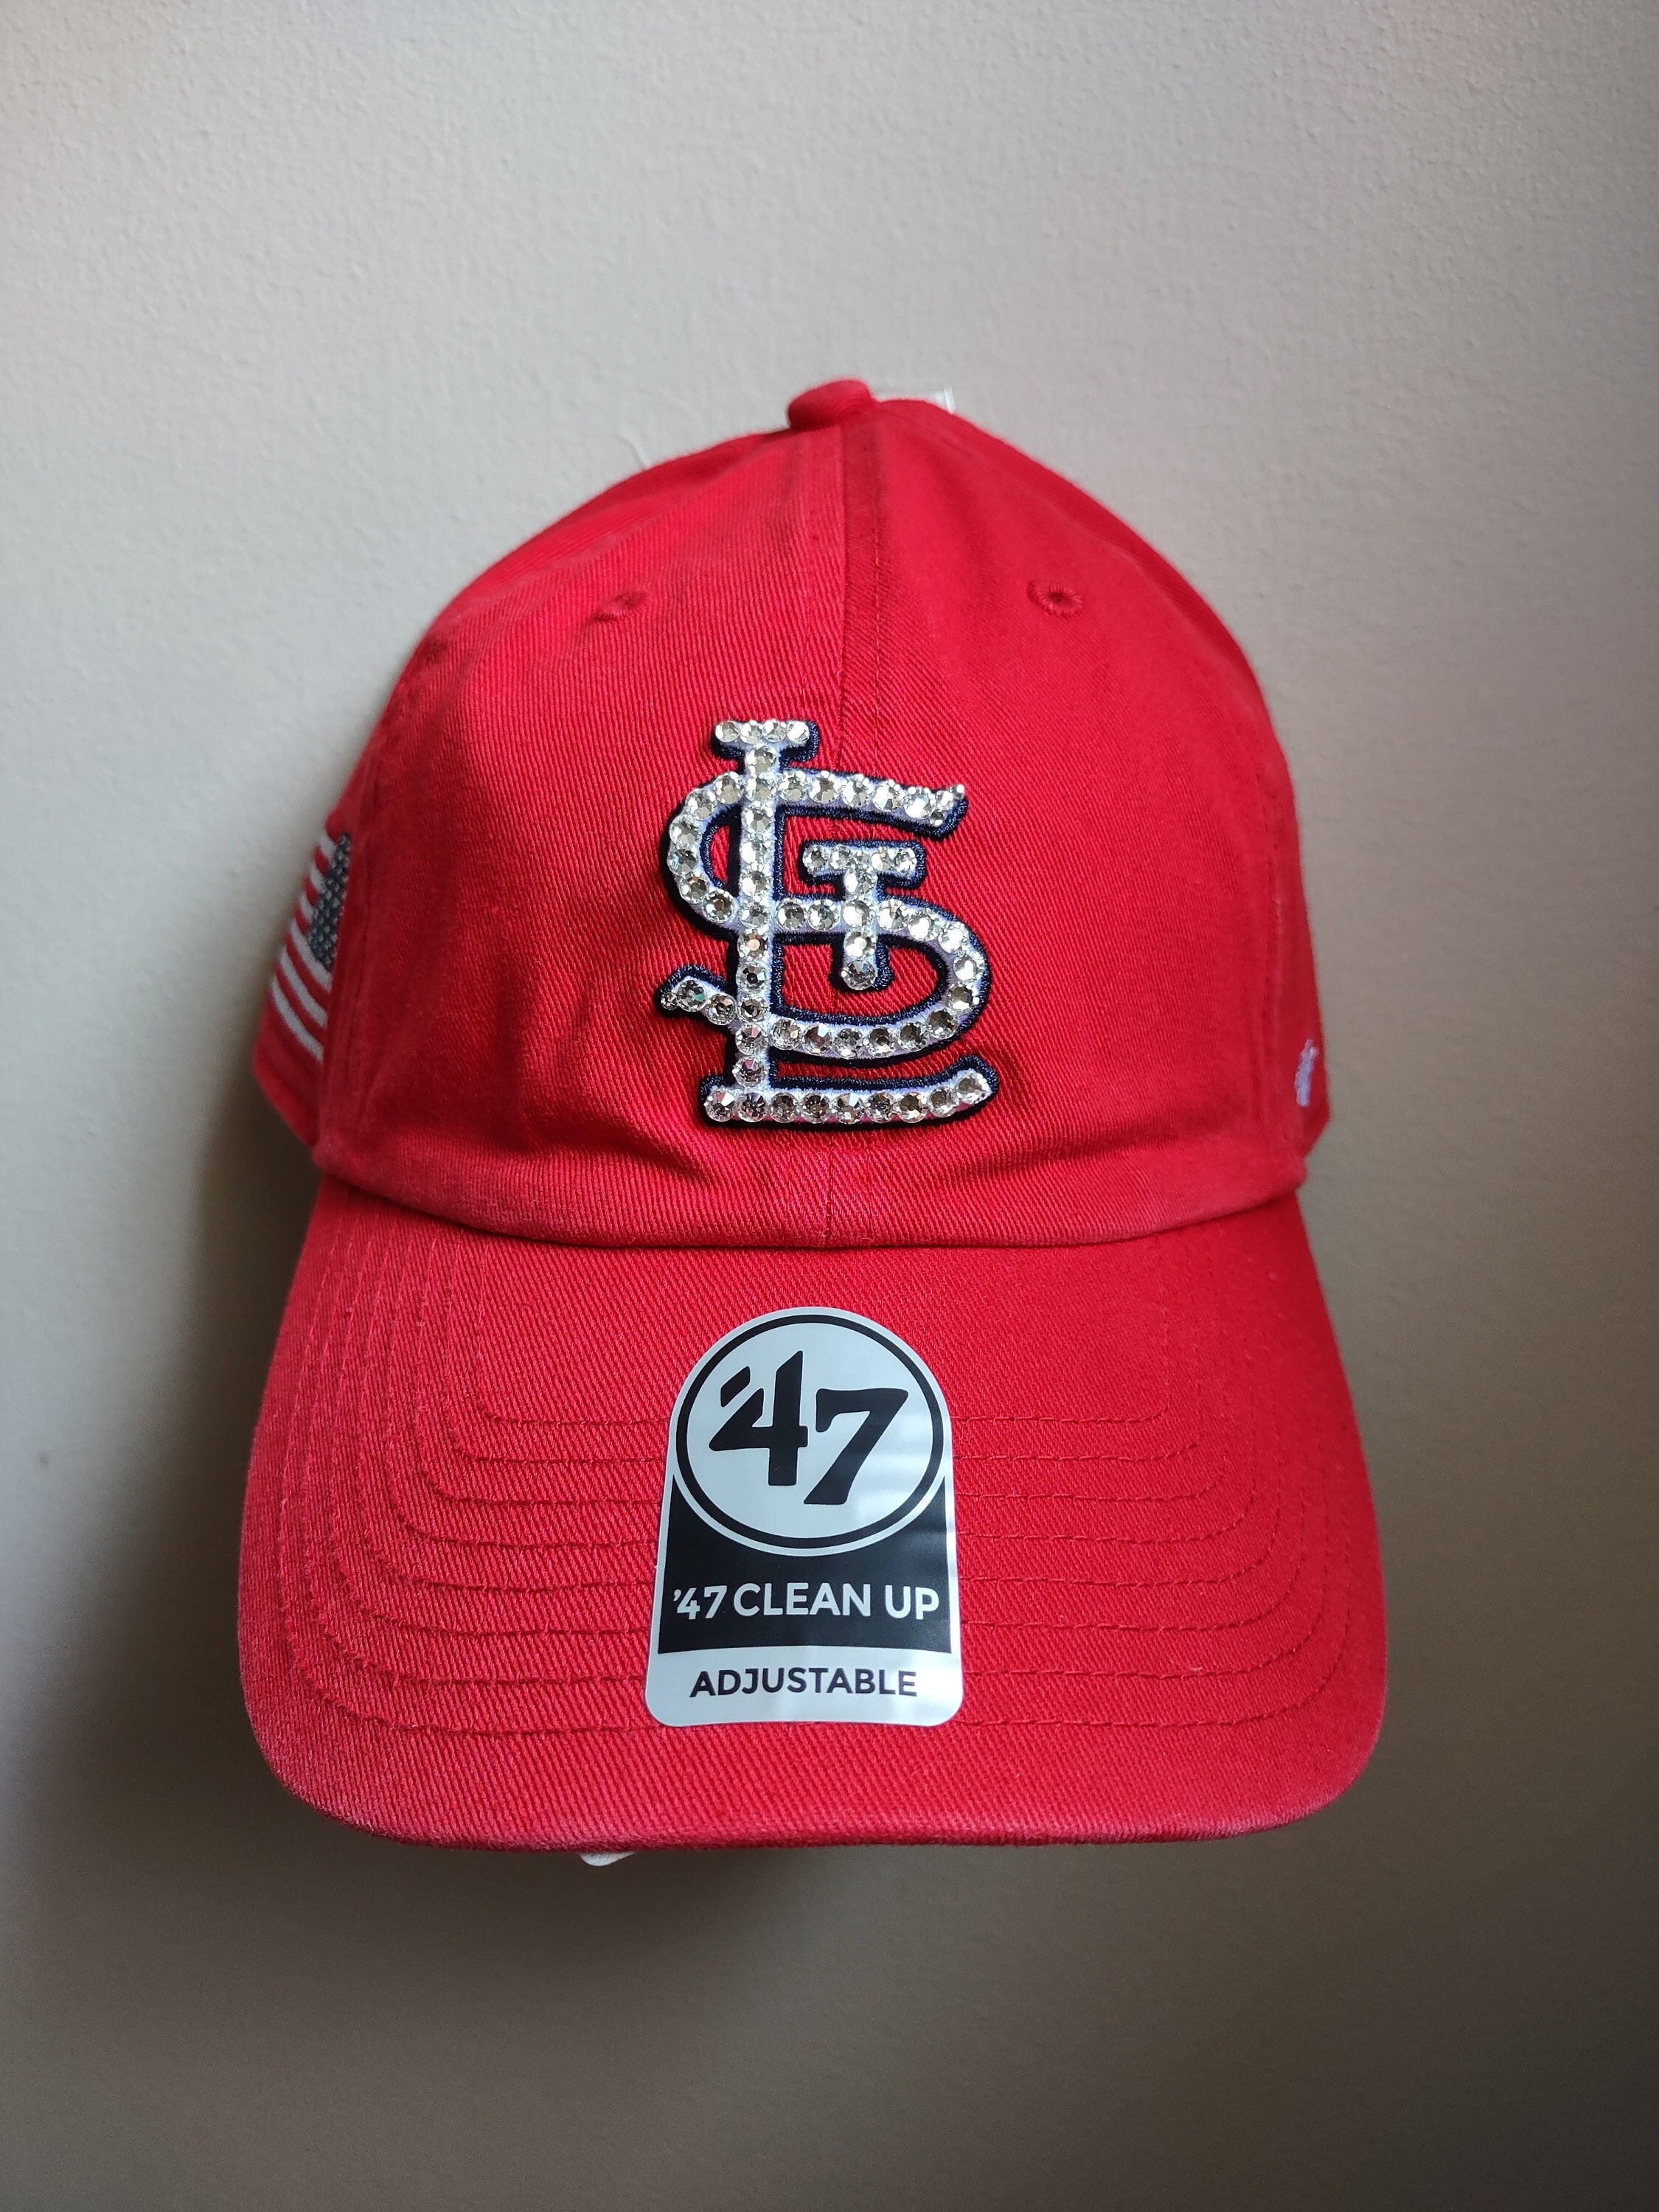 St. Louis Cardinals '47 Clean Up Adjustable Hat - Olive